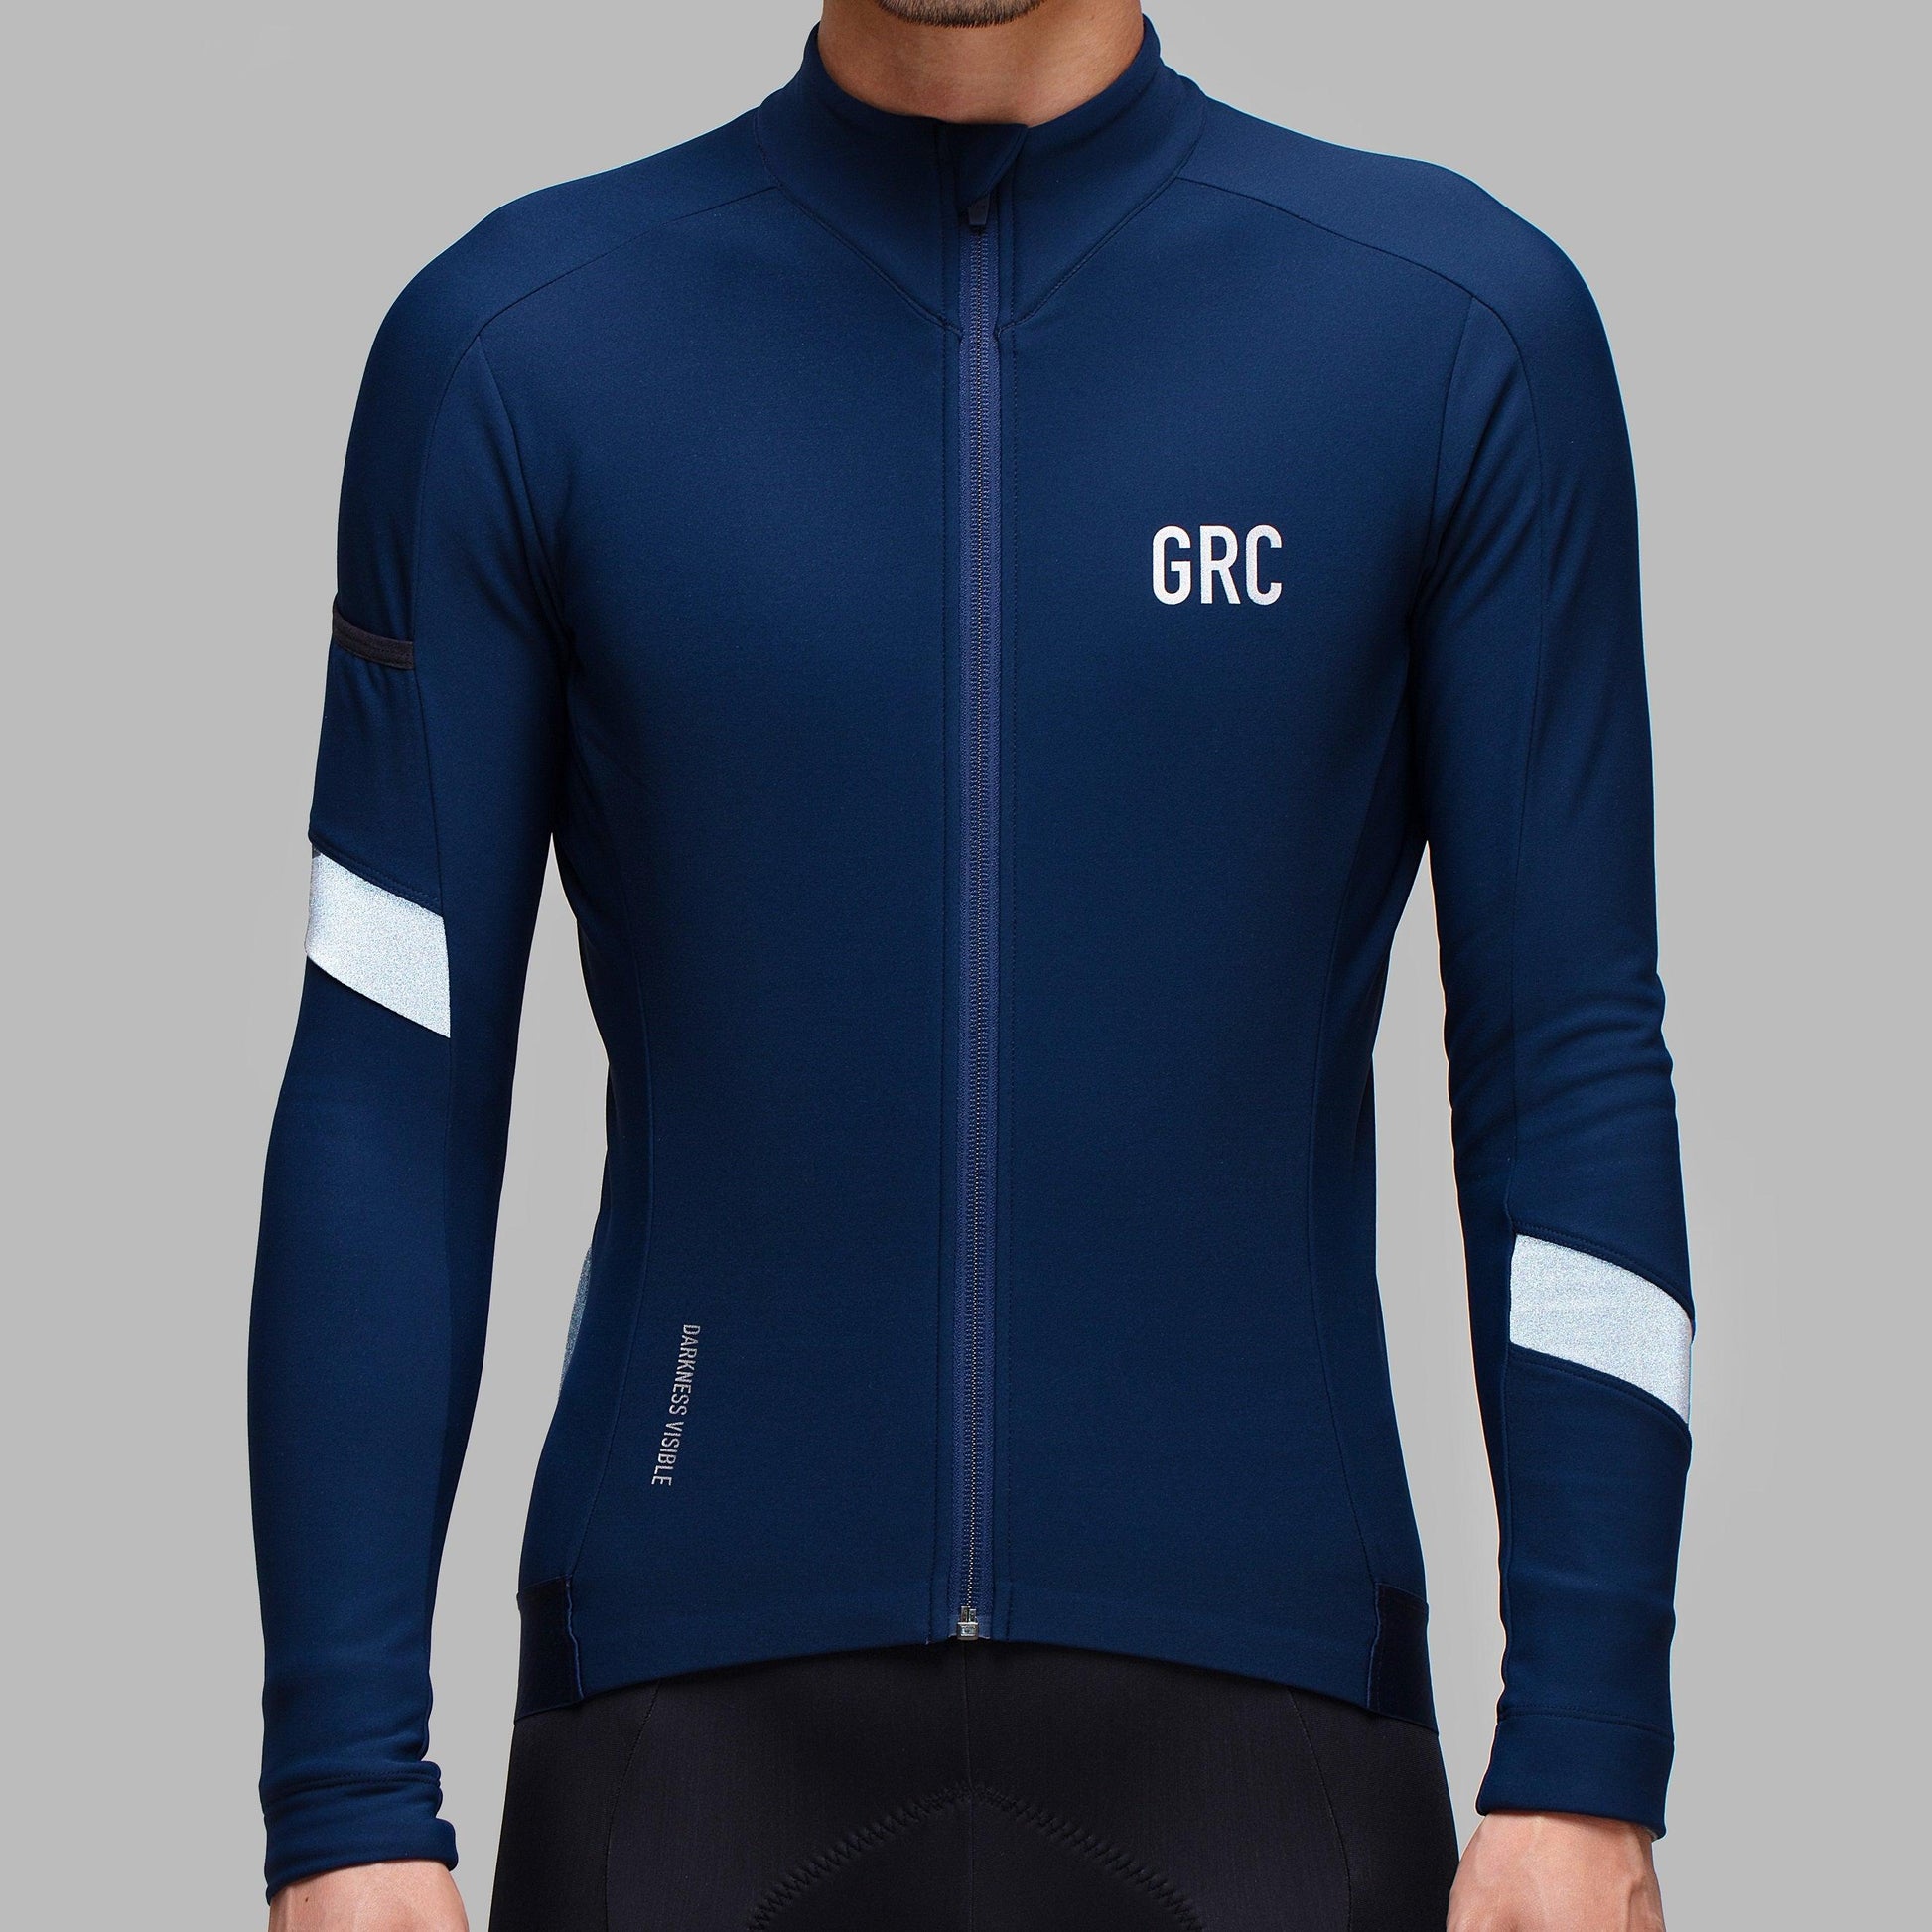 Classic Navy Winter Jacket - GRC Cycling Apparel